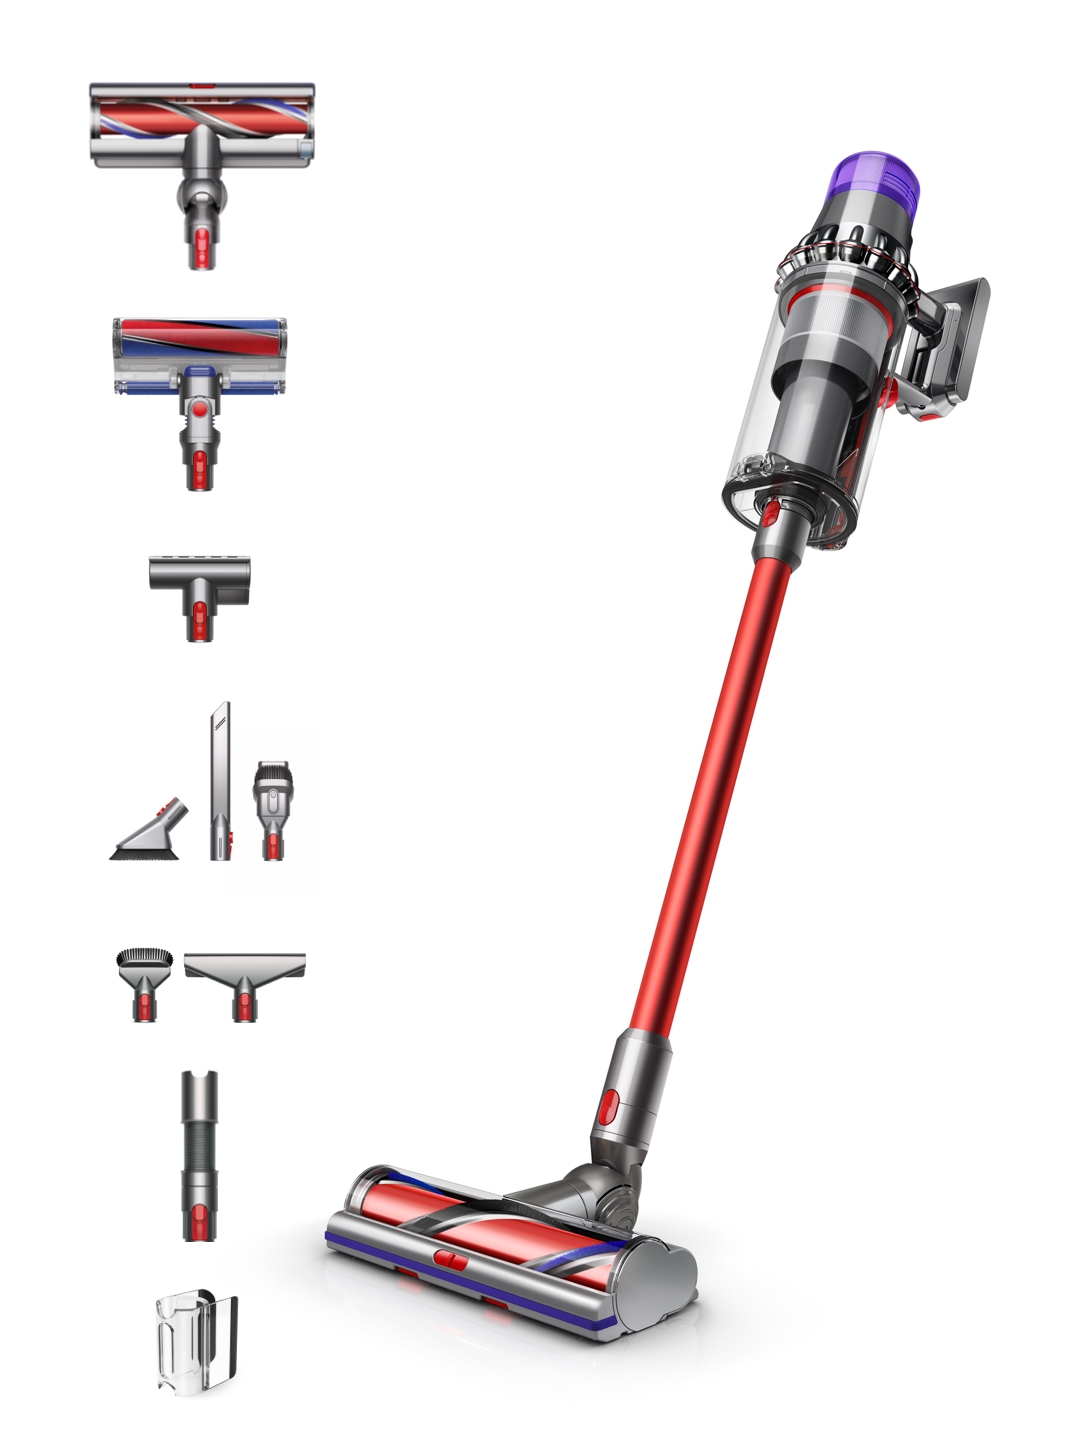 Dyson Outsize Extra Cordless Stick Vacuum